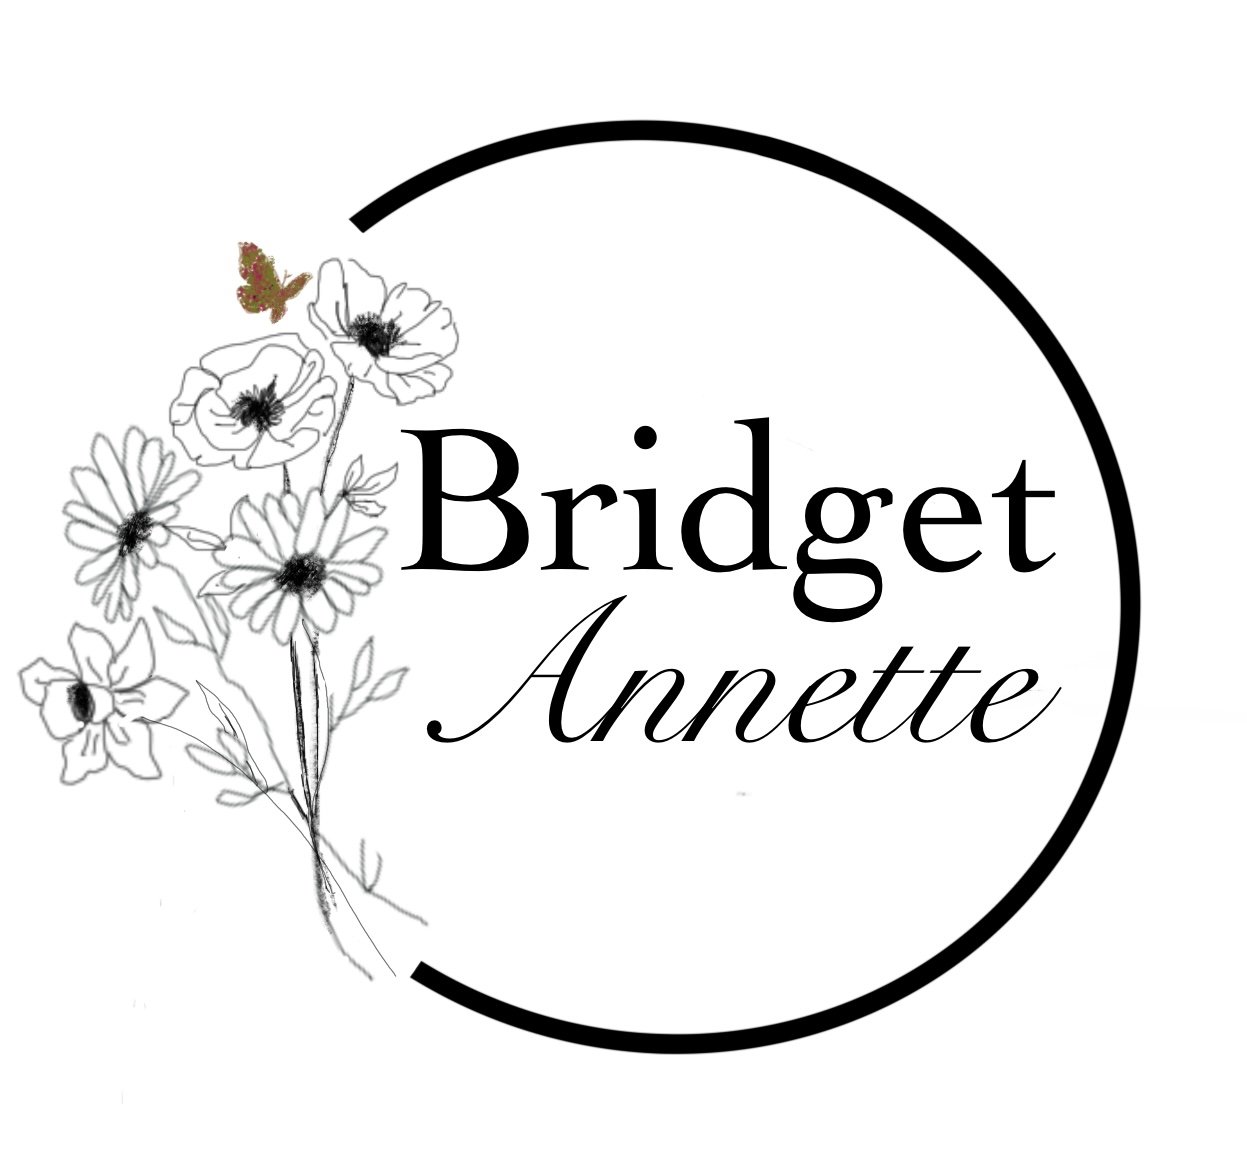 Bridget Annette